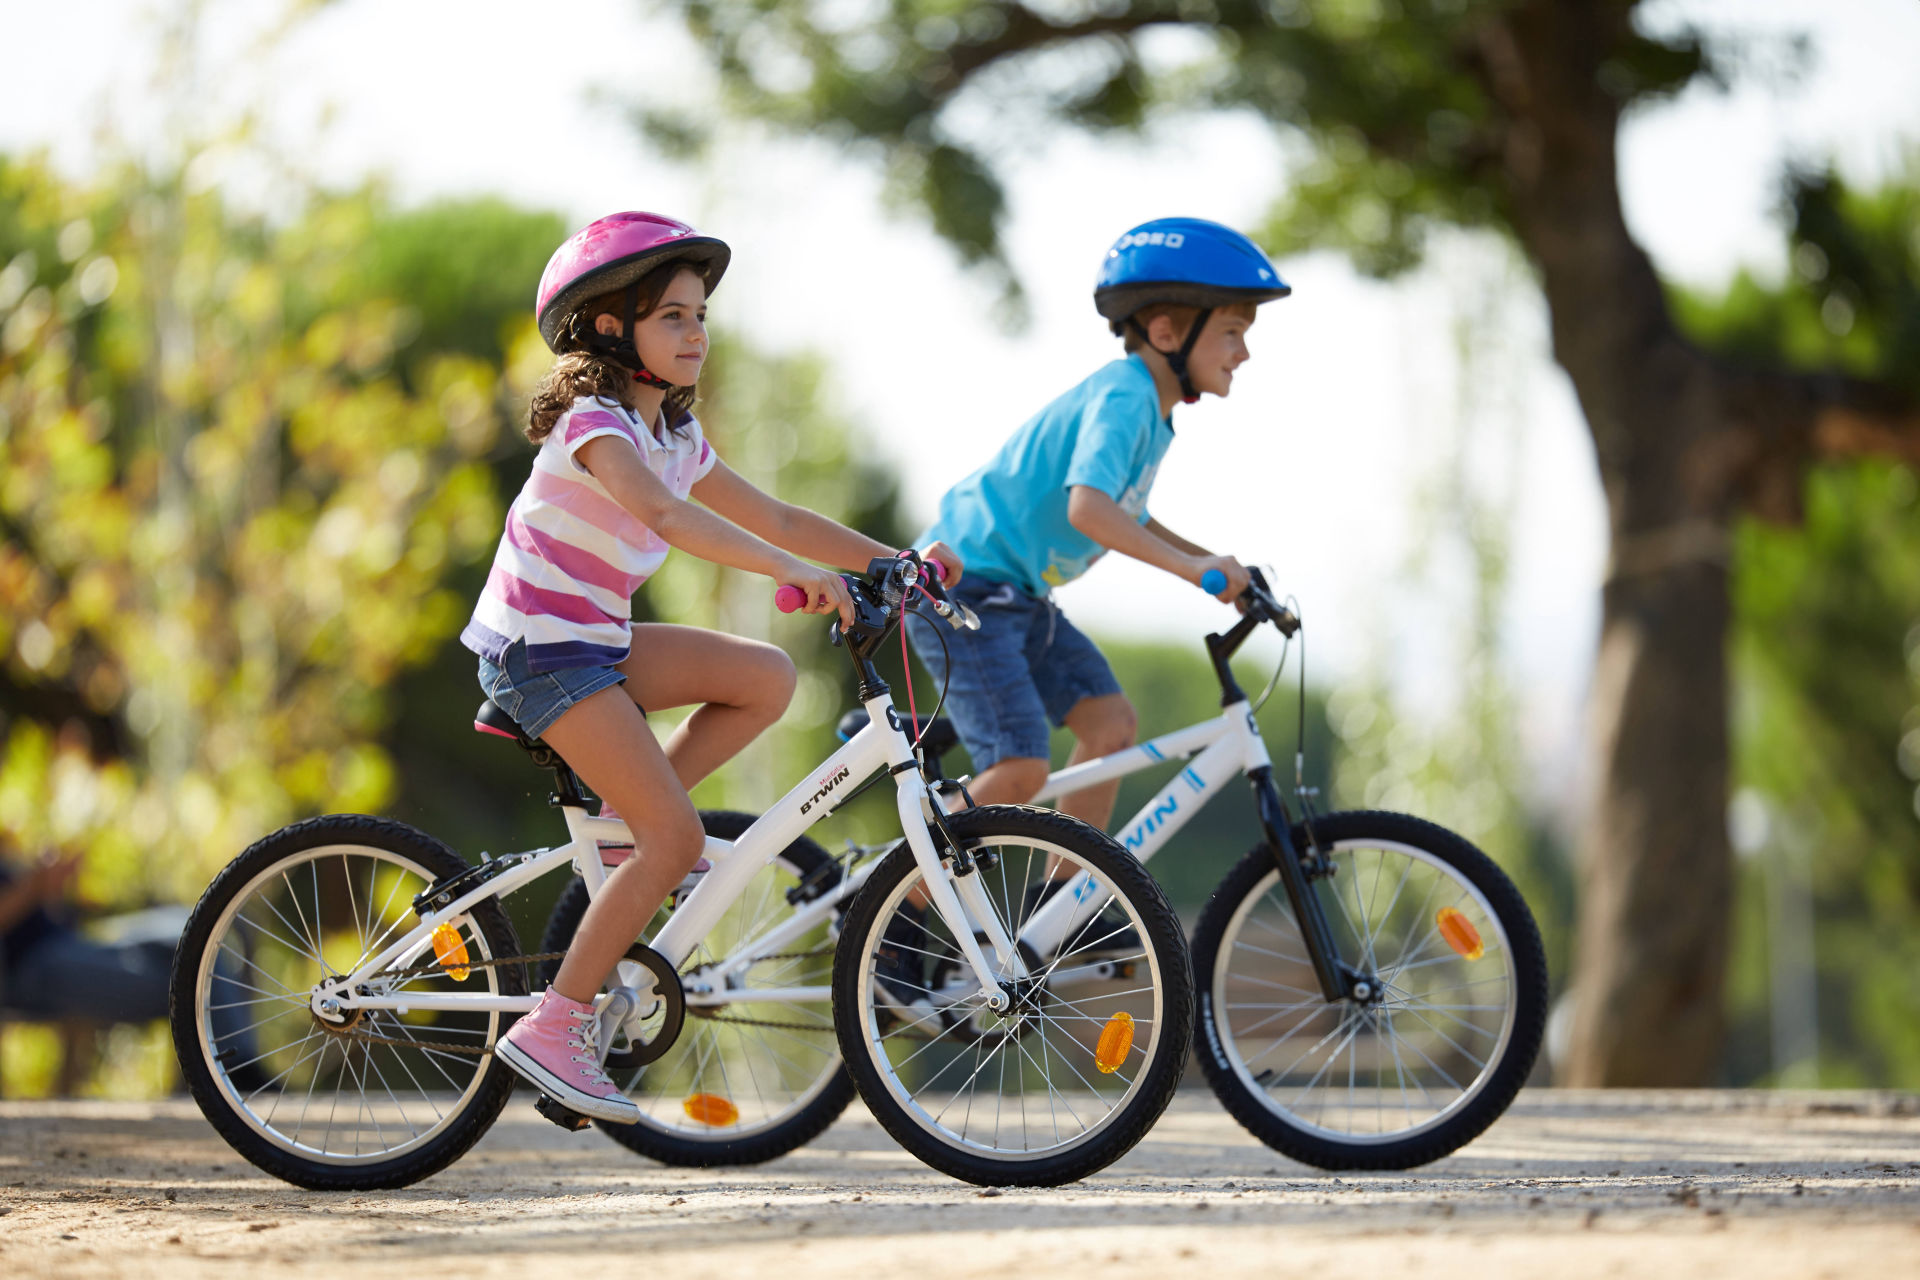 The children are riding bikes. Велосипед детский. Дети с велосипедом. Дети катаются на велосипеде. Катание на велосипеде.